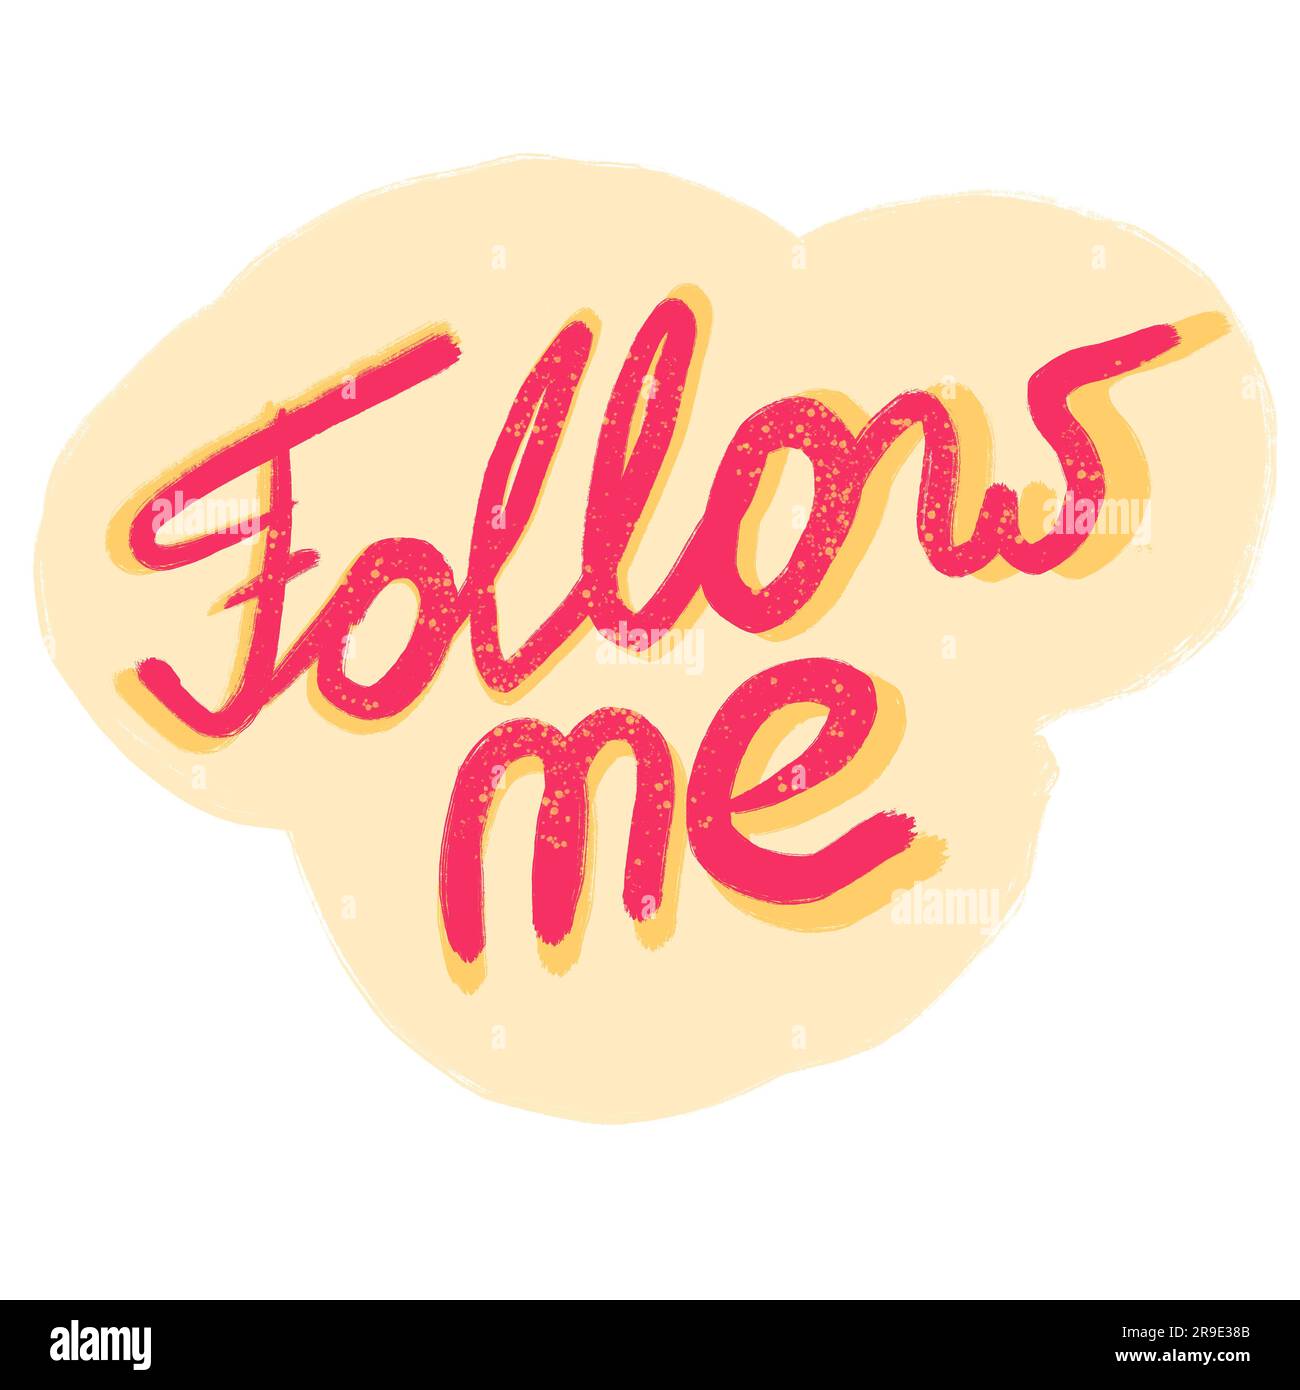 Follow Me text Button. Follow Me Sign Icon Label Sticker Web Buttons  23362620 Vector Art at Vecteezy